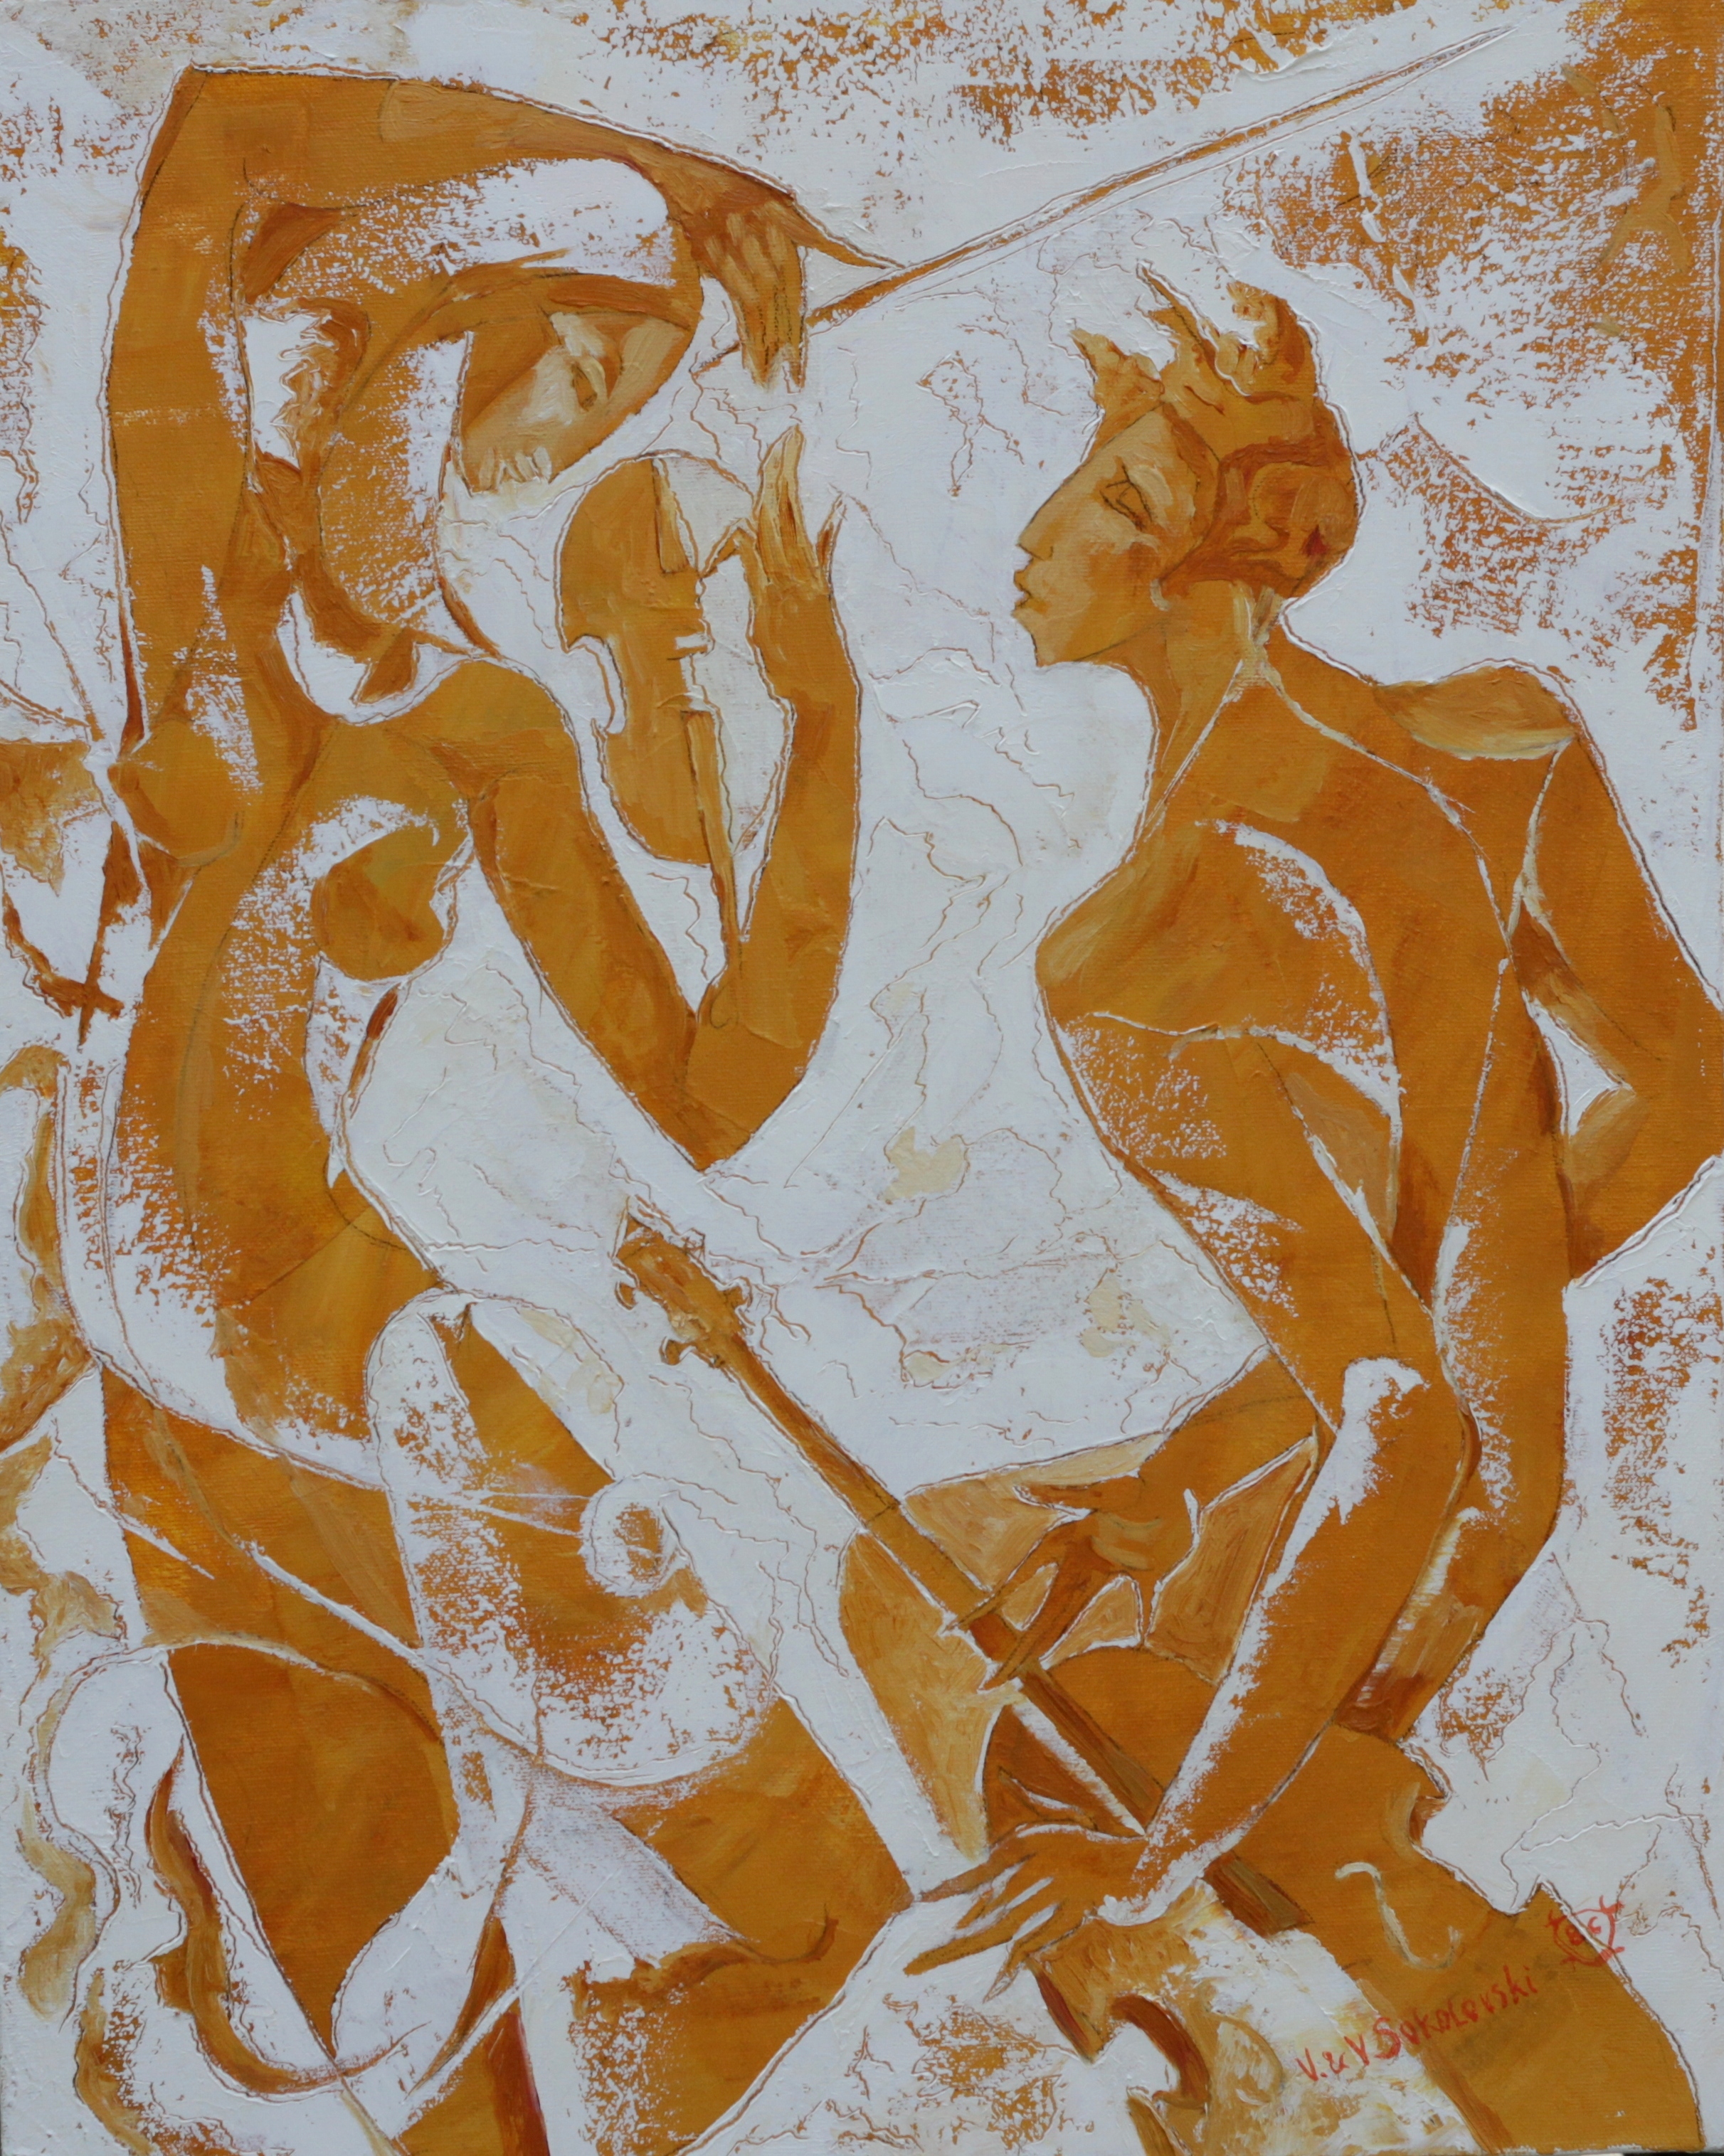 Duet - Oil on canvas - 20 x 16 inches - Valeri Sokolovski - artofvaleri.com